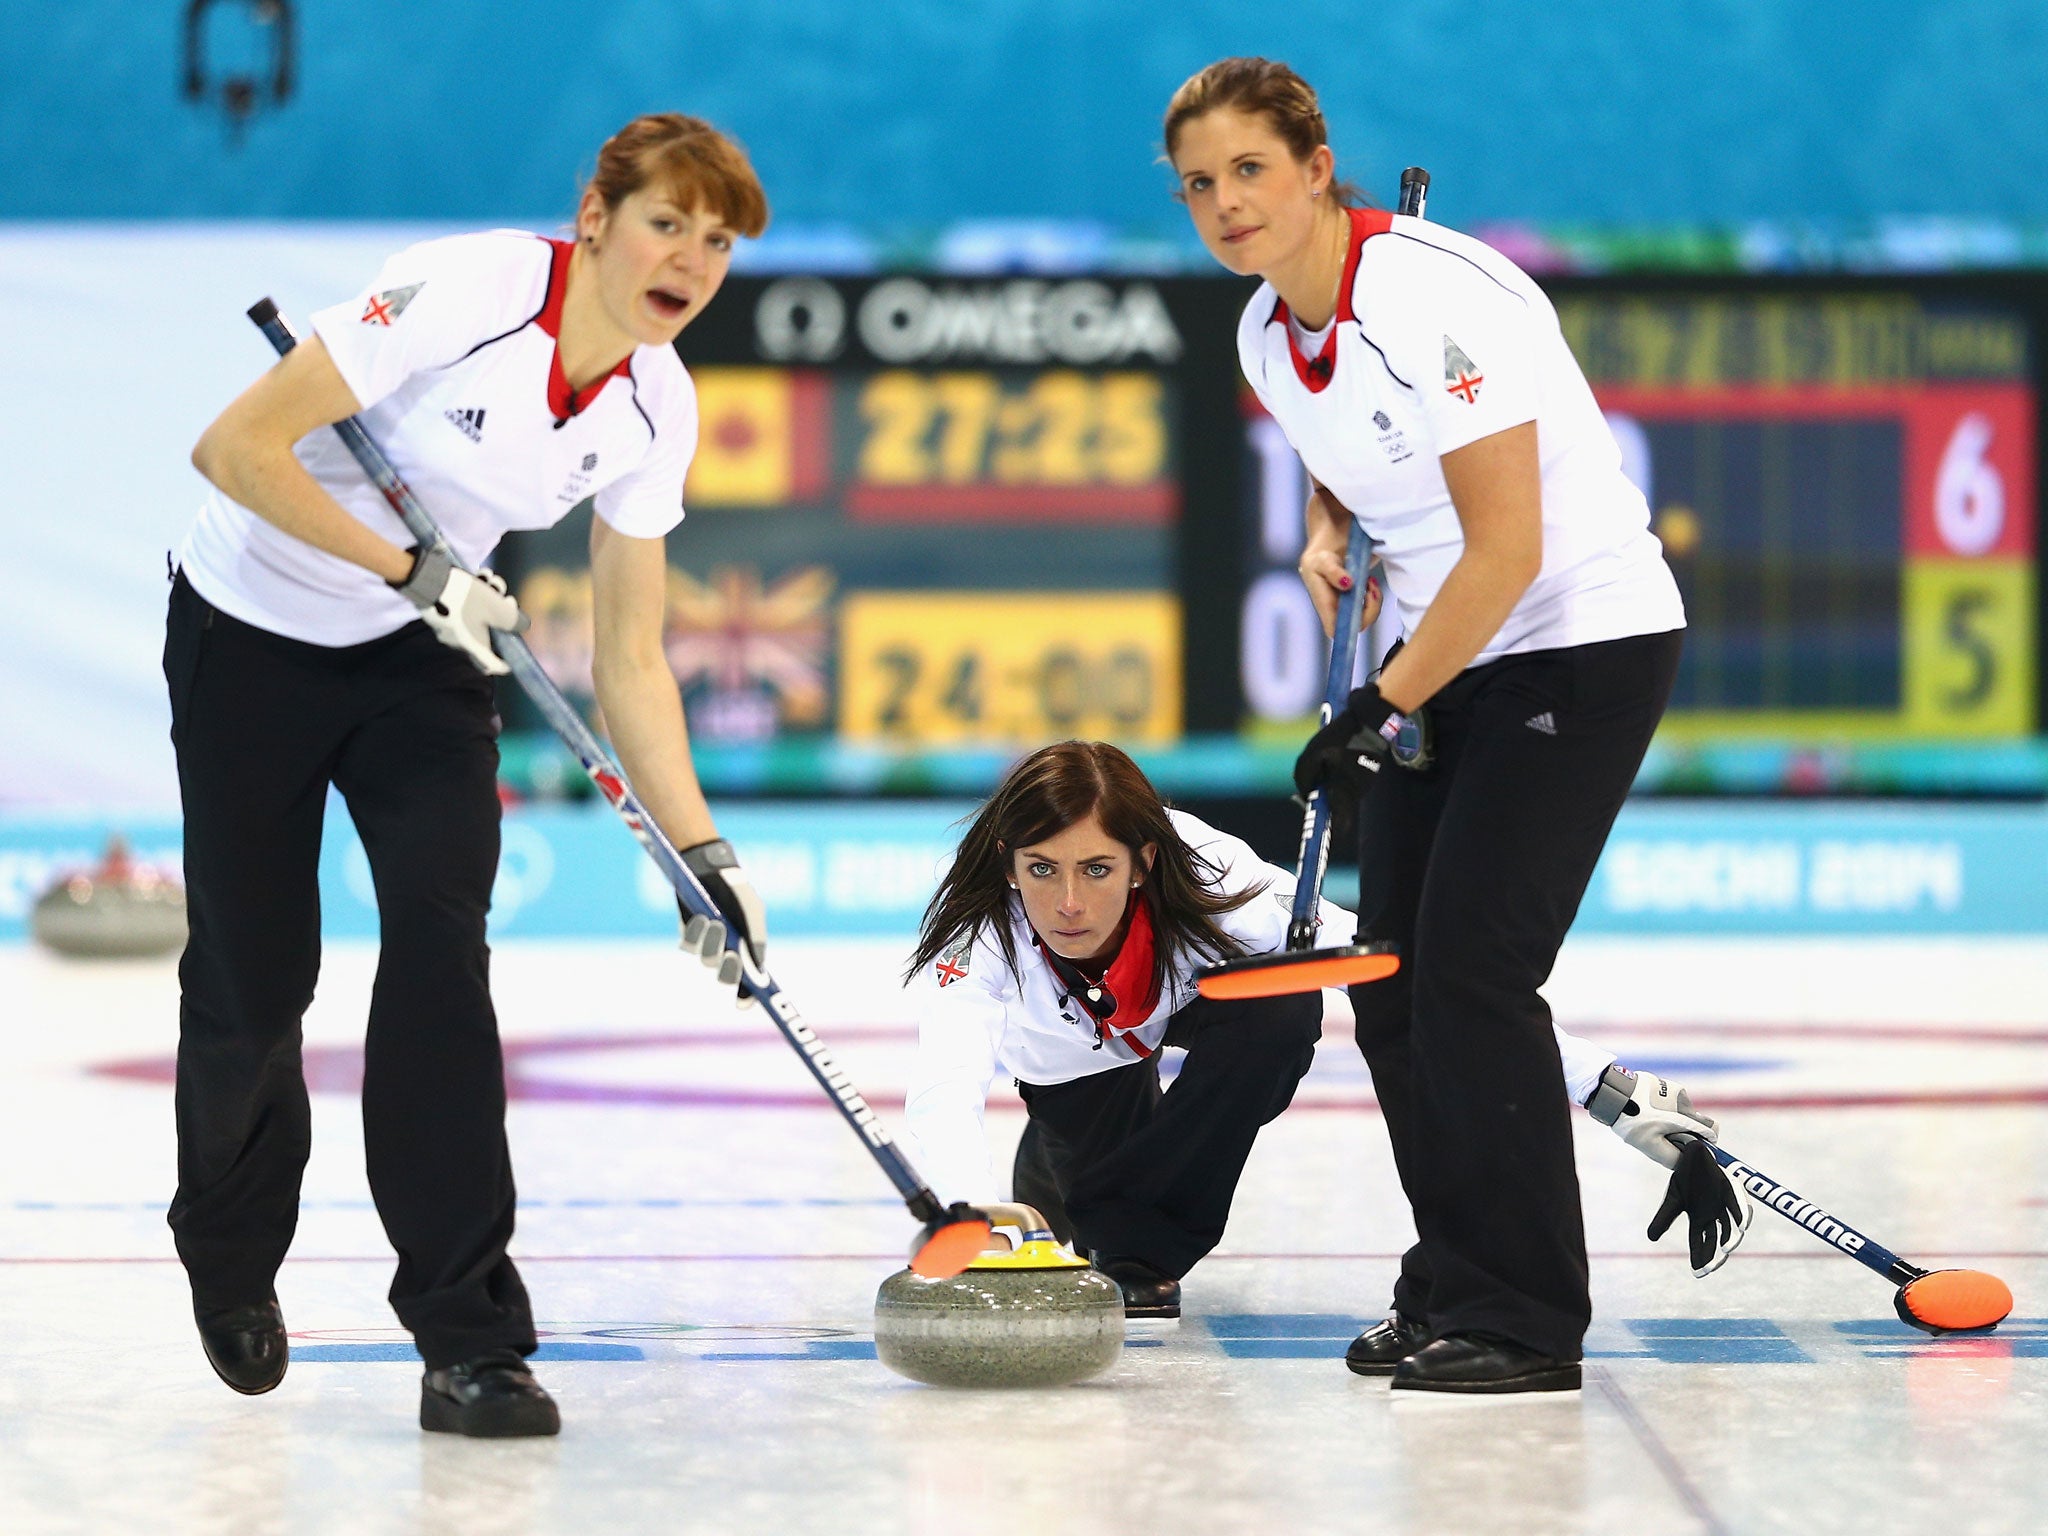 Winter Olympics 2014: Great Britain's women's curling team suffer